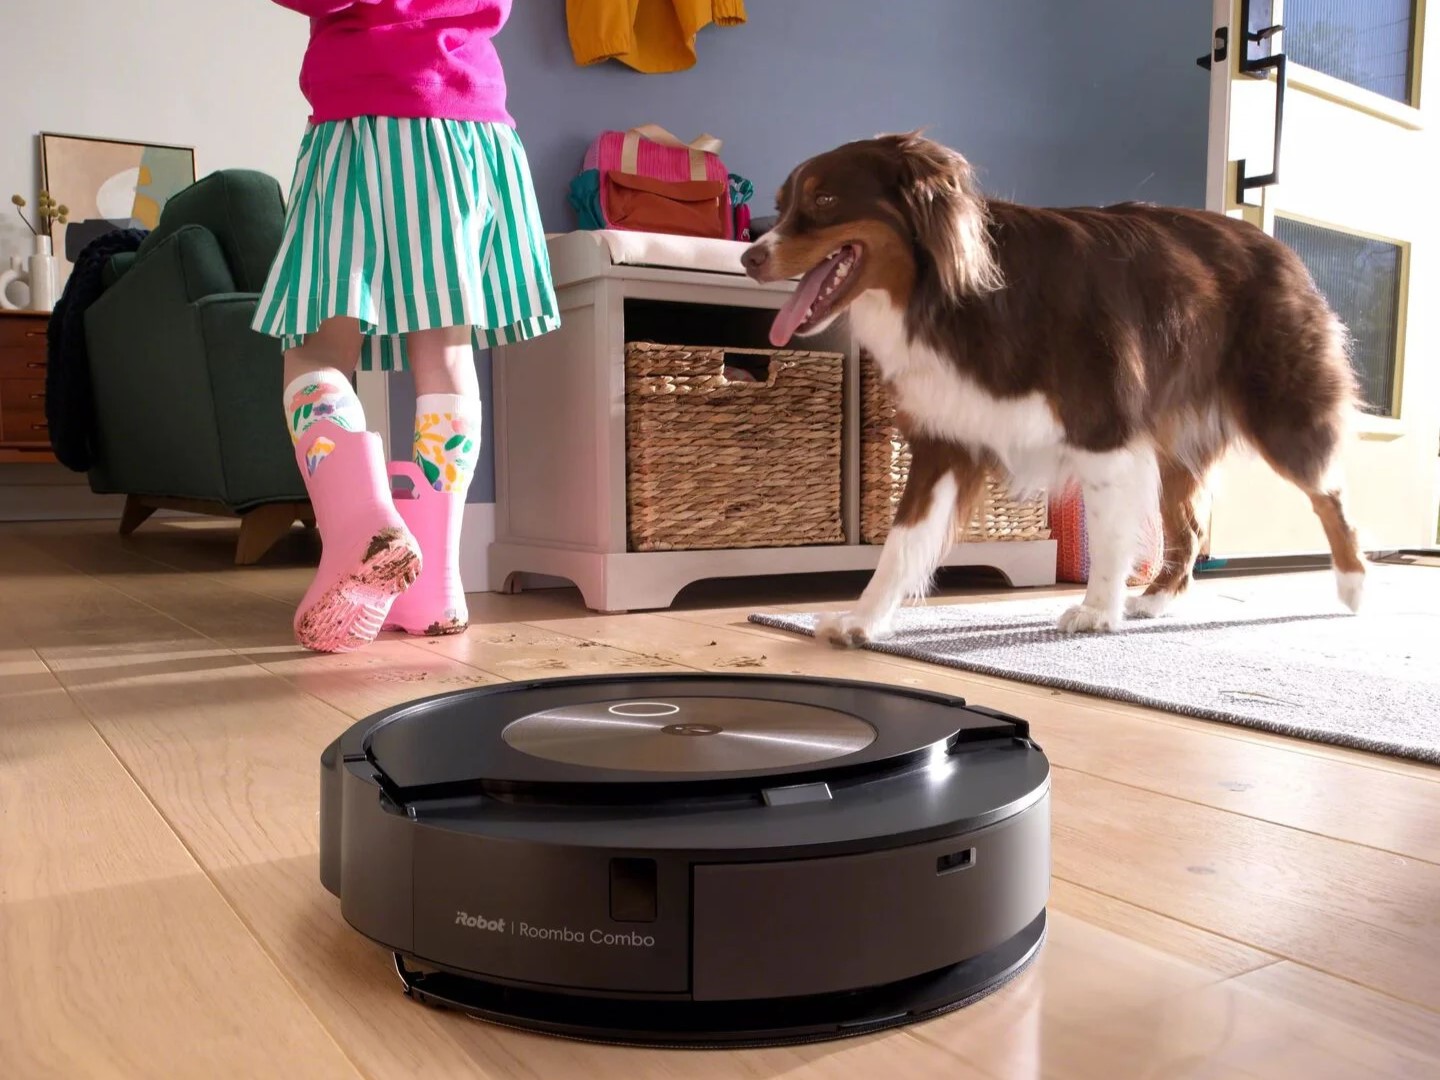 iRobot Roomba j7+ Robot Vacuum Cleaner Review: Picks Up After Itself